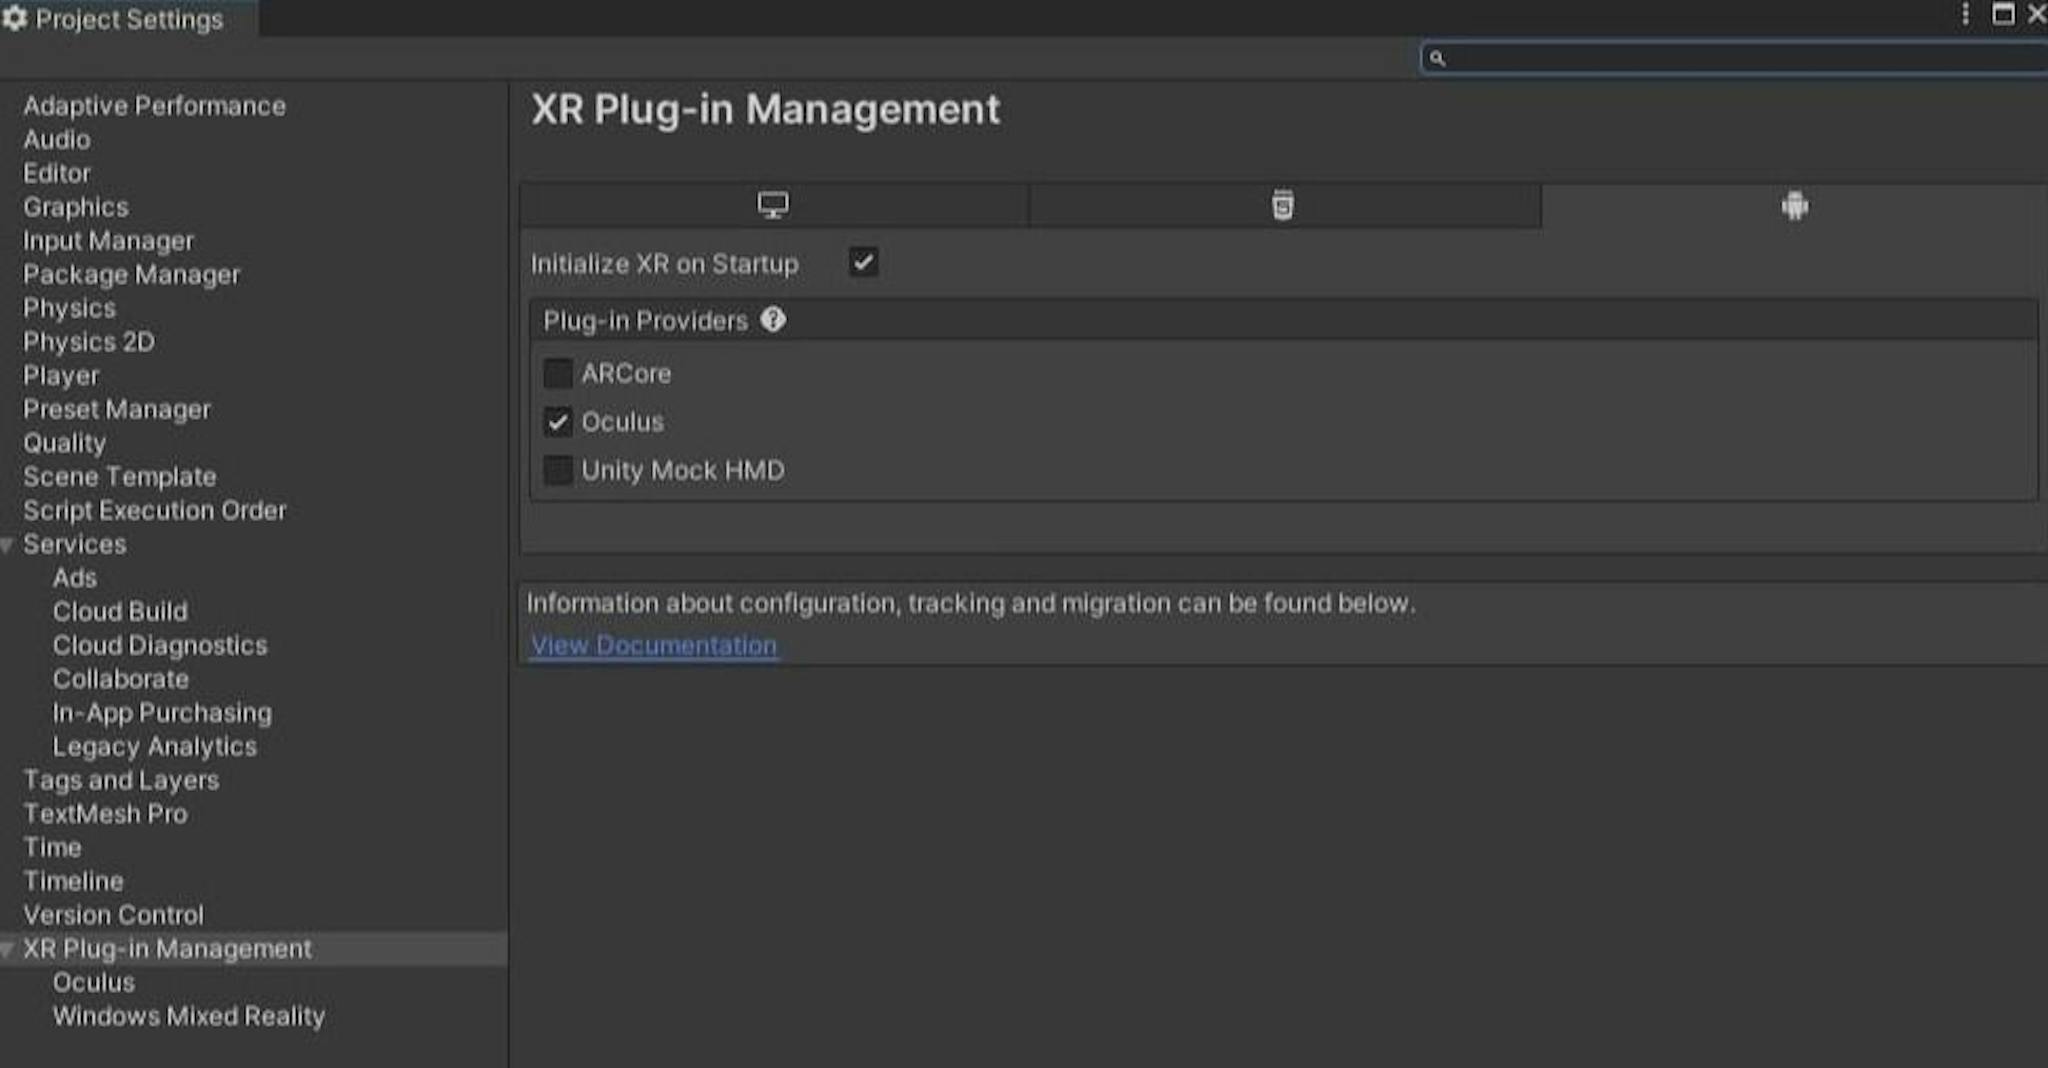 XR Plug-in Management